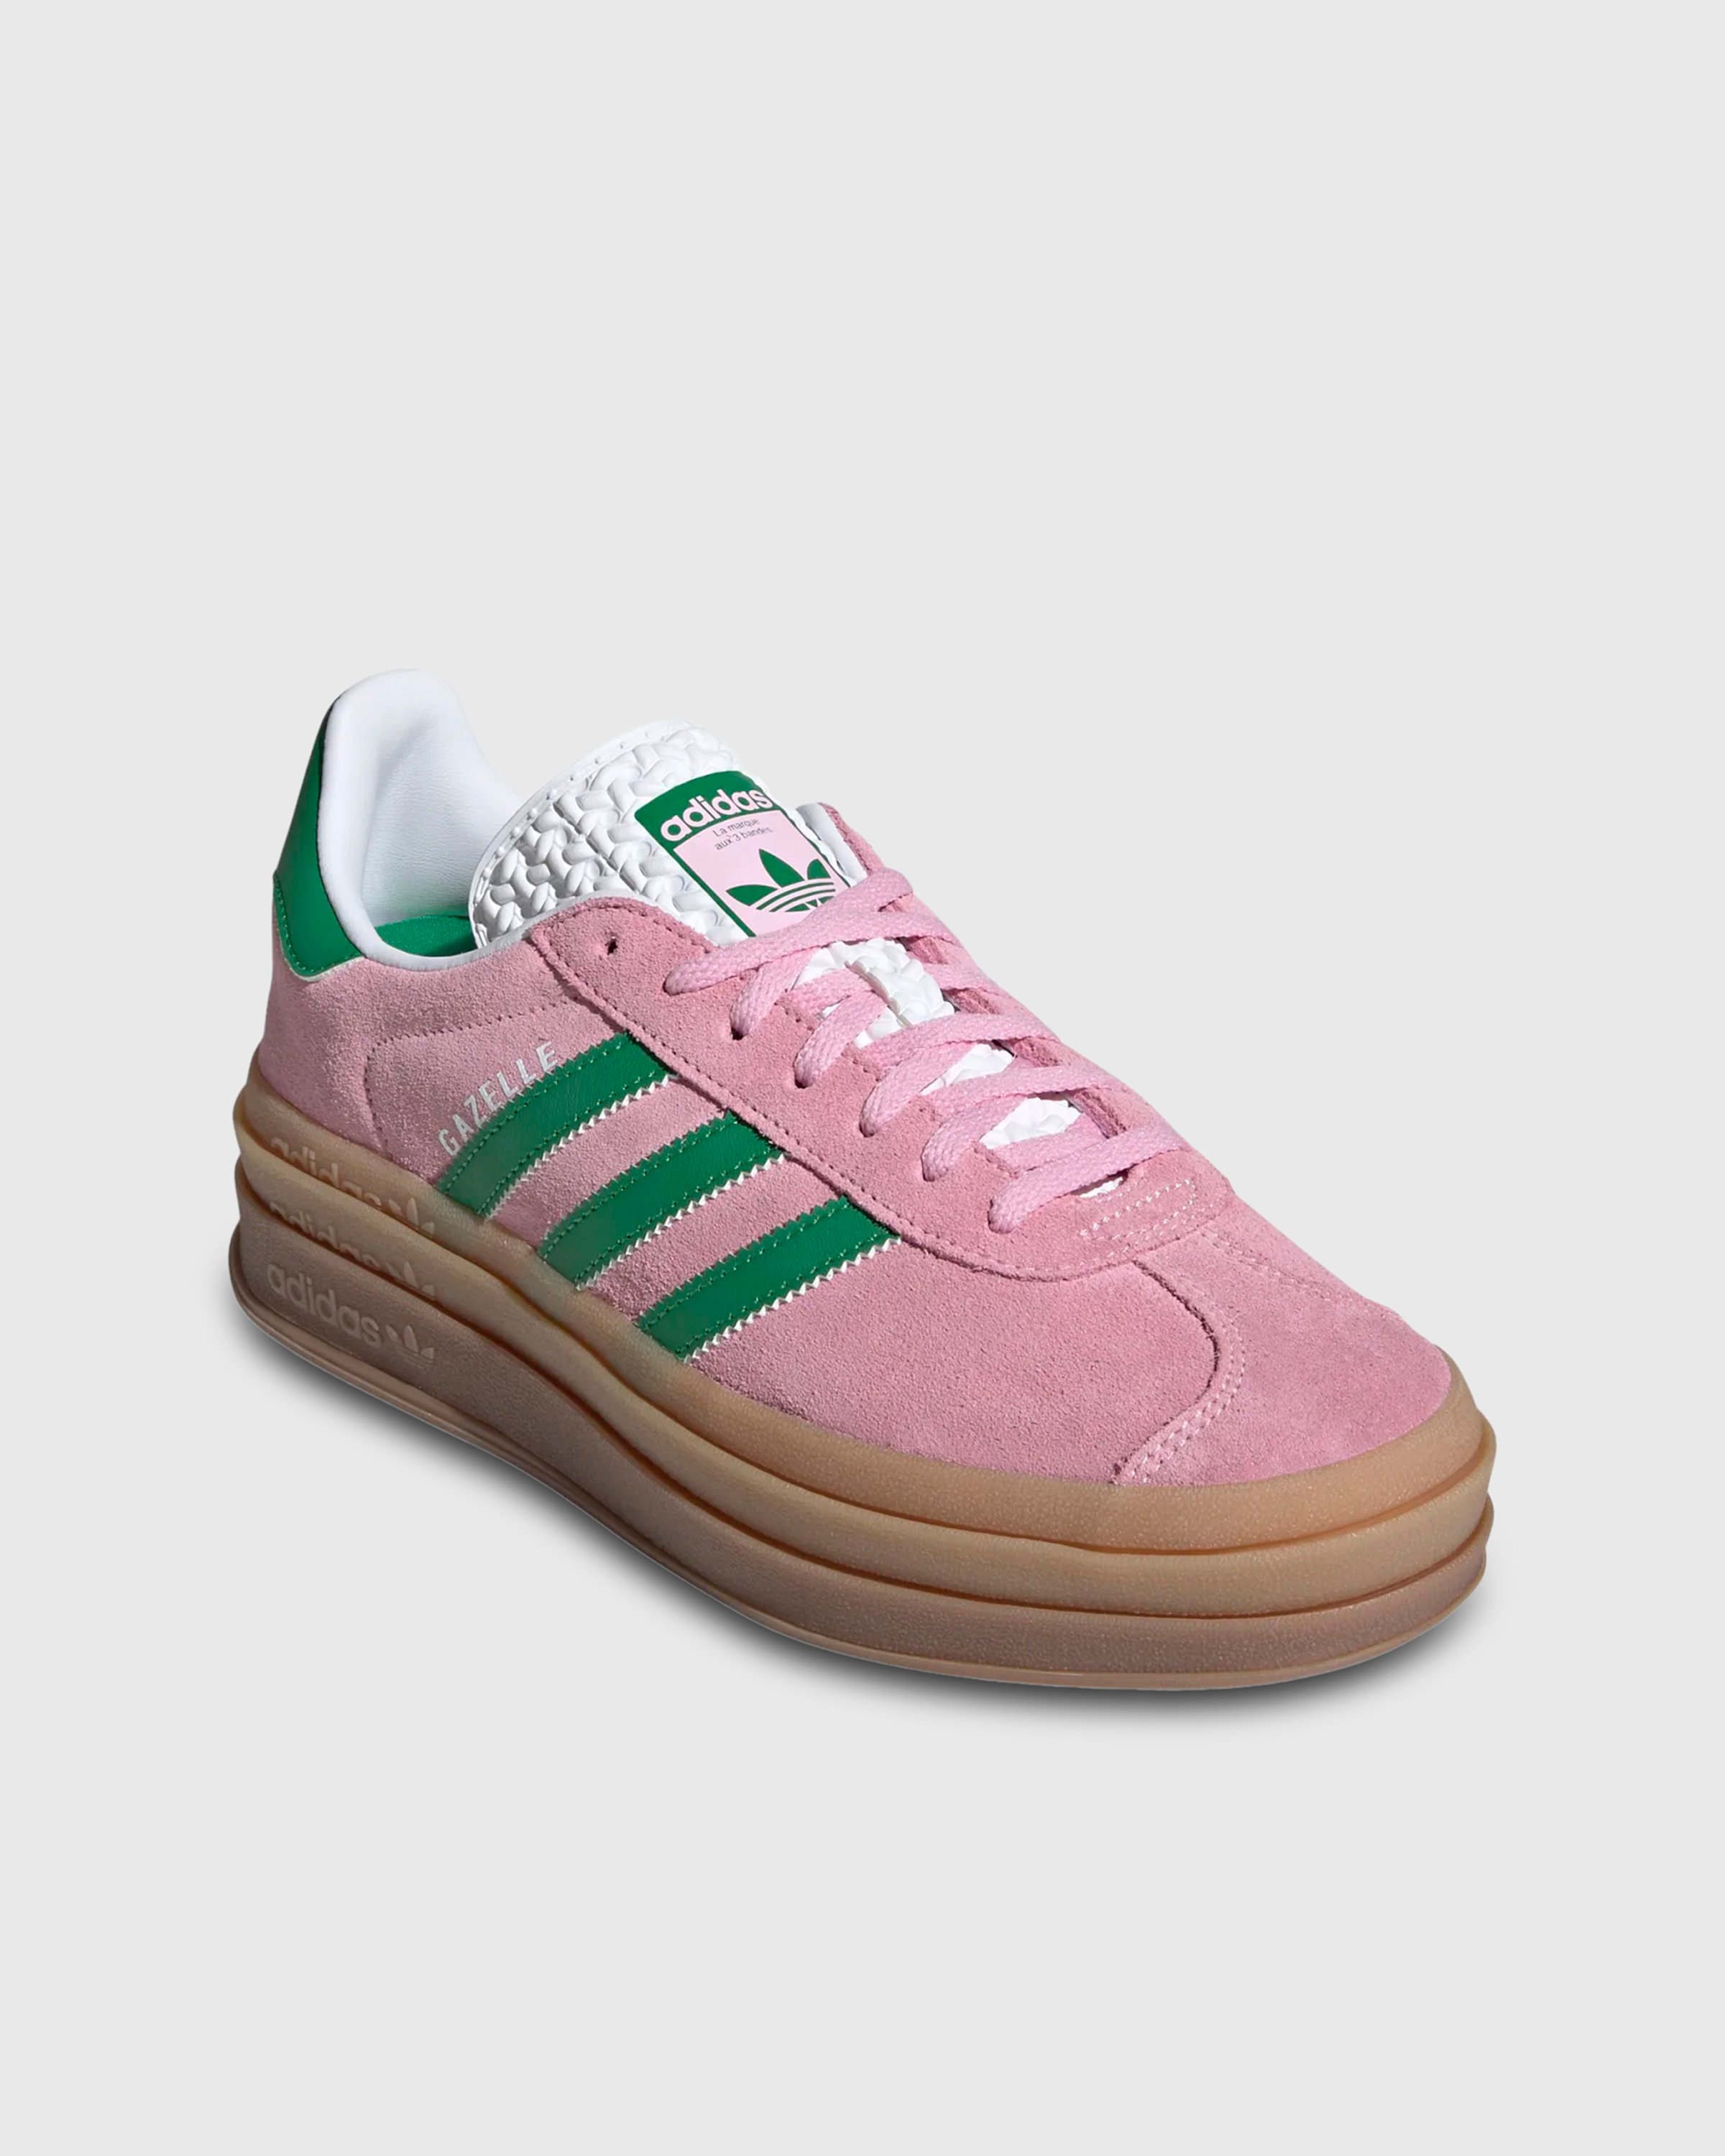 Adidas - GAZELLE BOLD W      TRUPNK/GREEN/FTWWHT - Footwear - Pink - Image 3